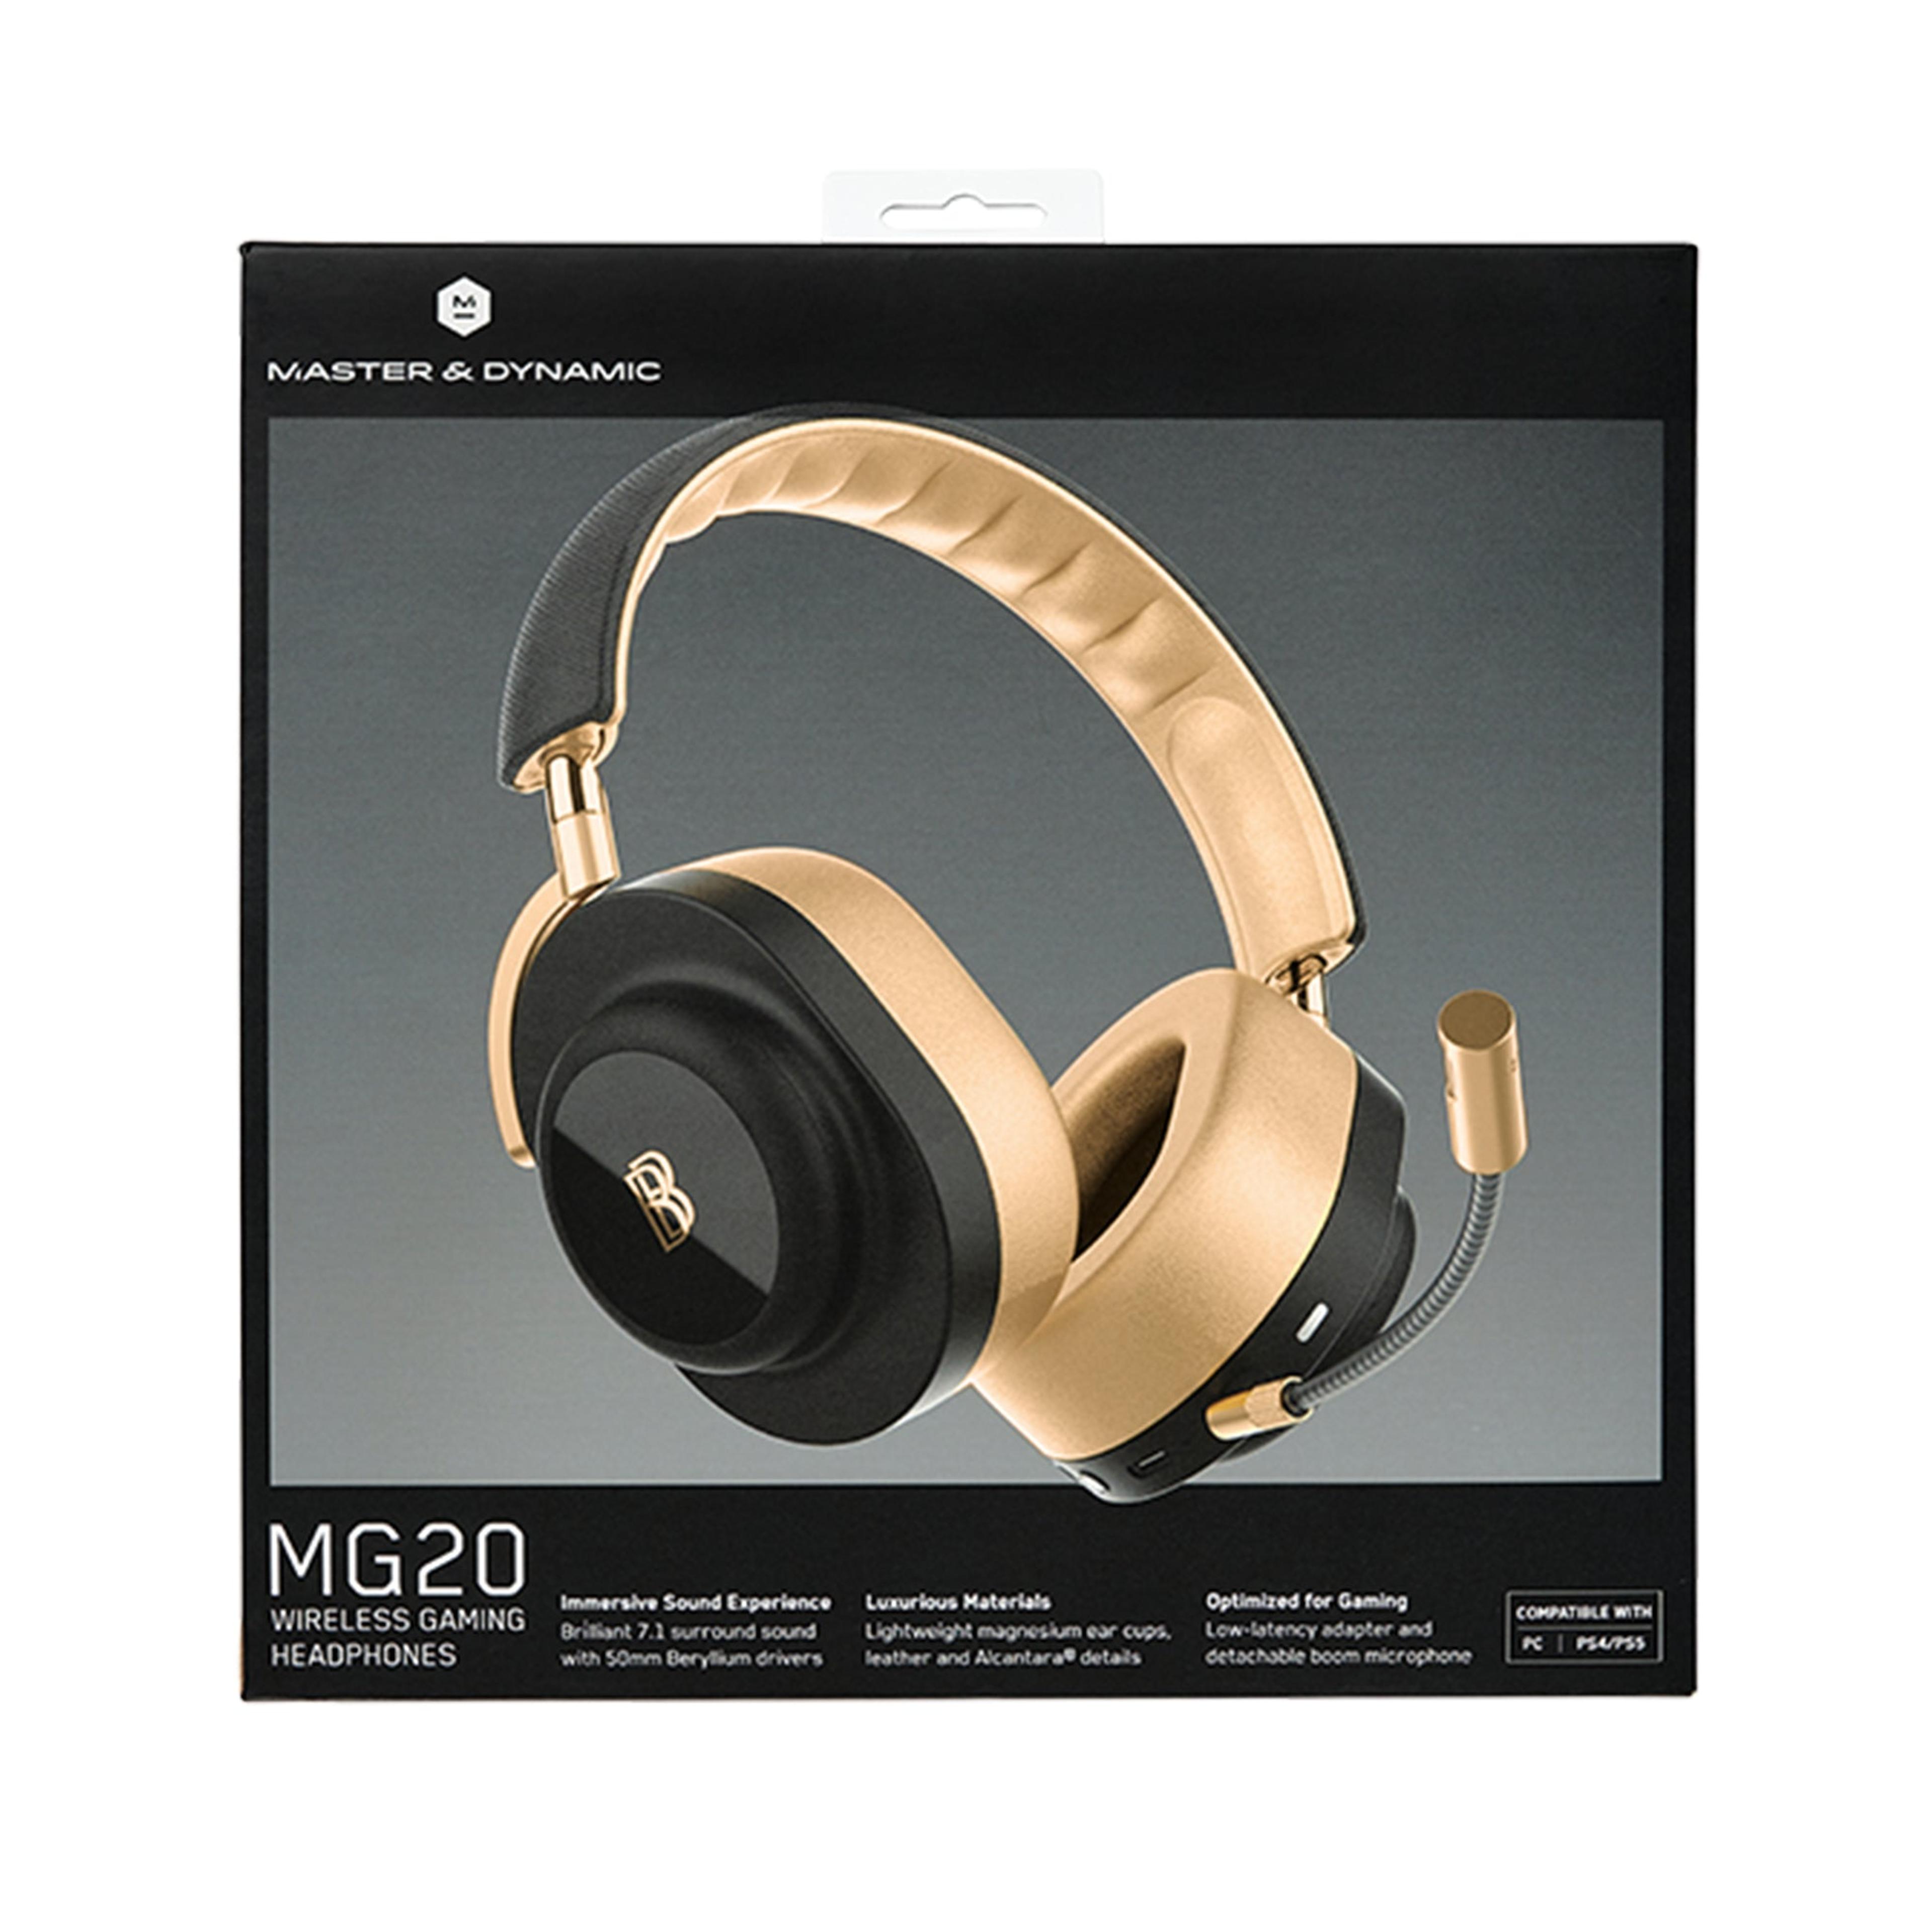 Alternate View 3 of MG20 Wireless Gaming Headphones - Ben Baller Edition